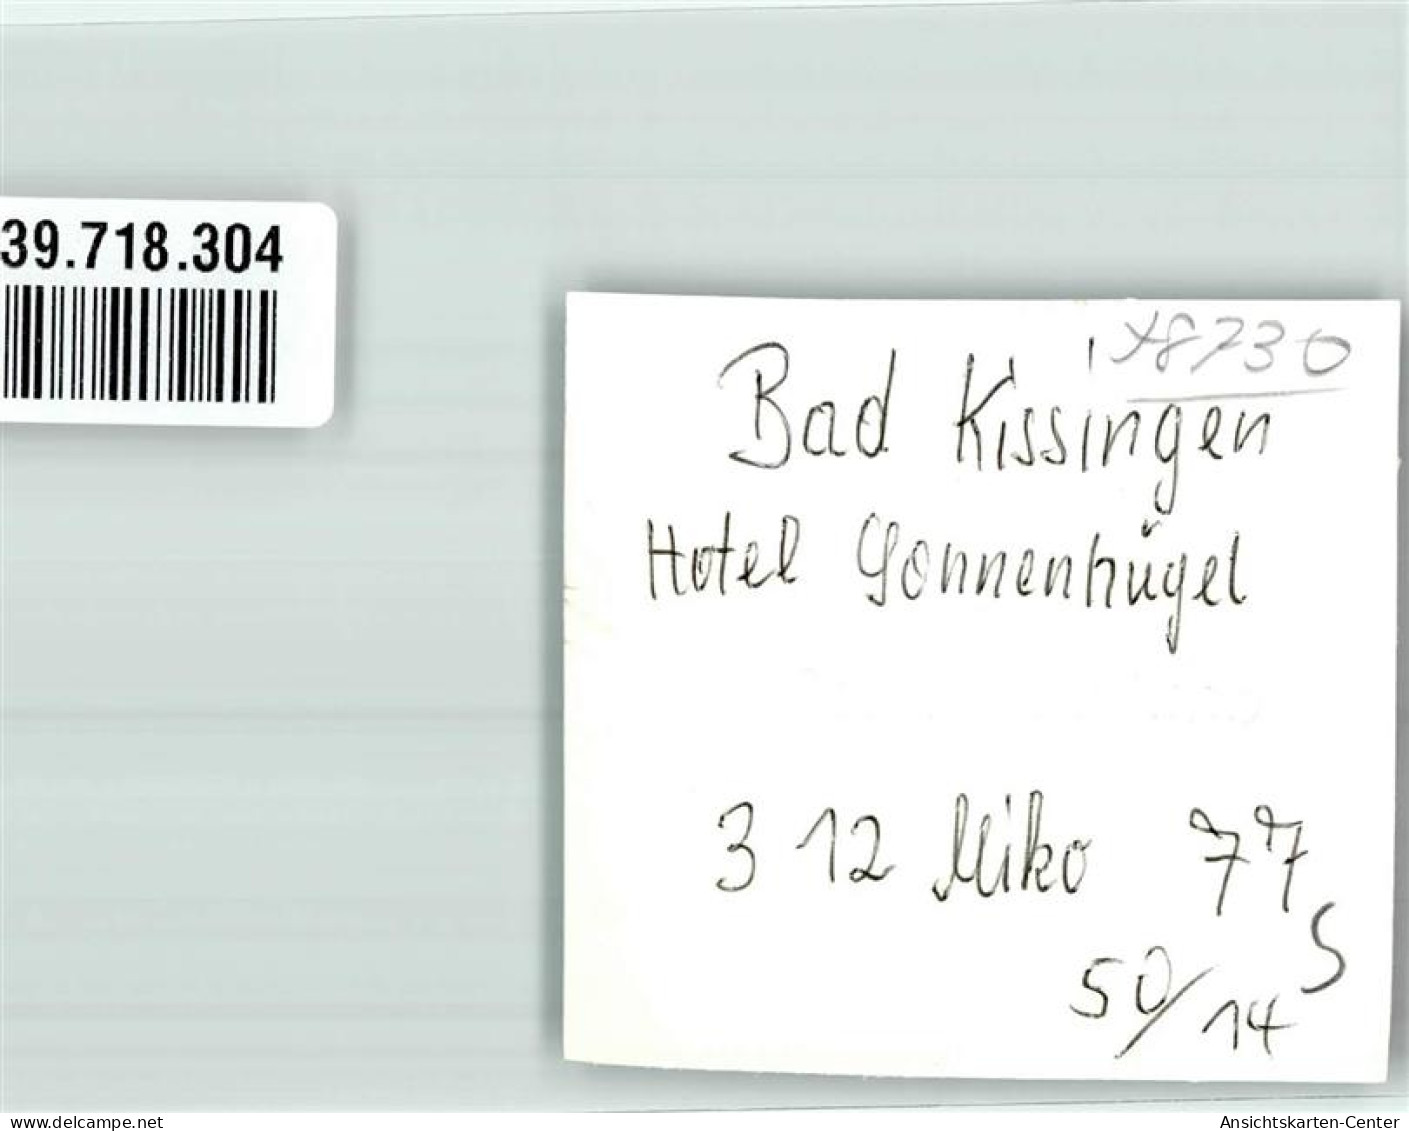 39718304 - Bad Kissingen - Bad Kissingen